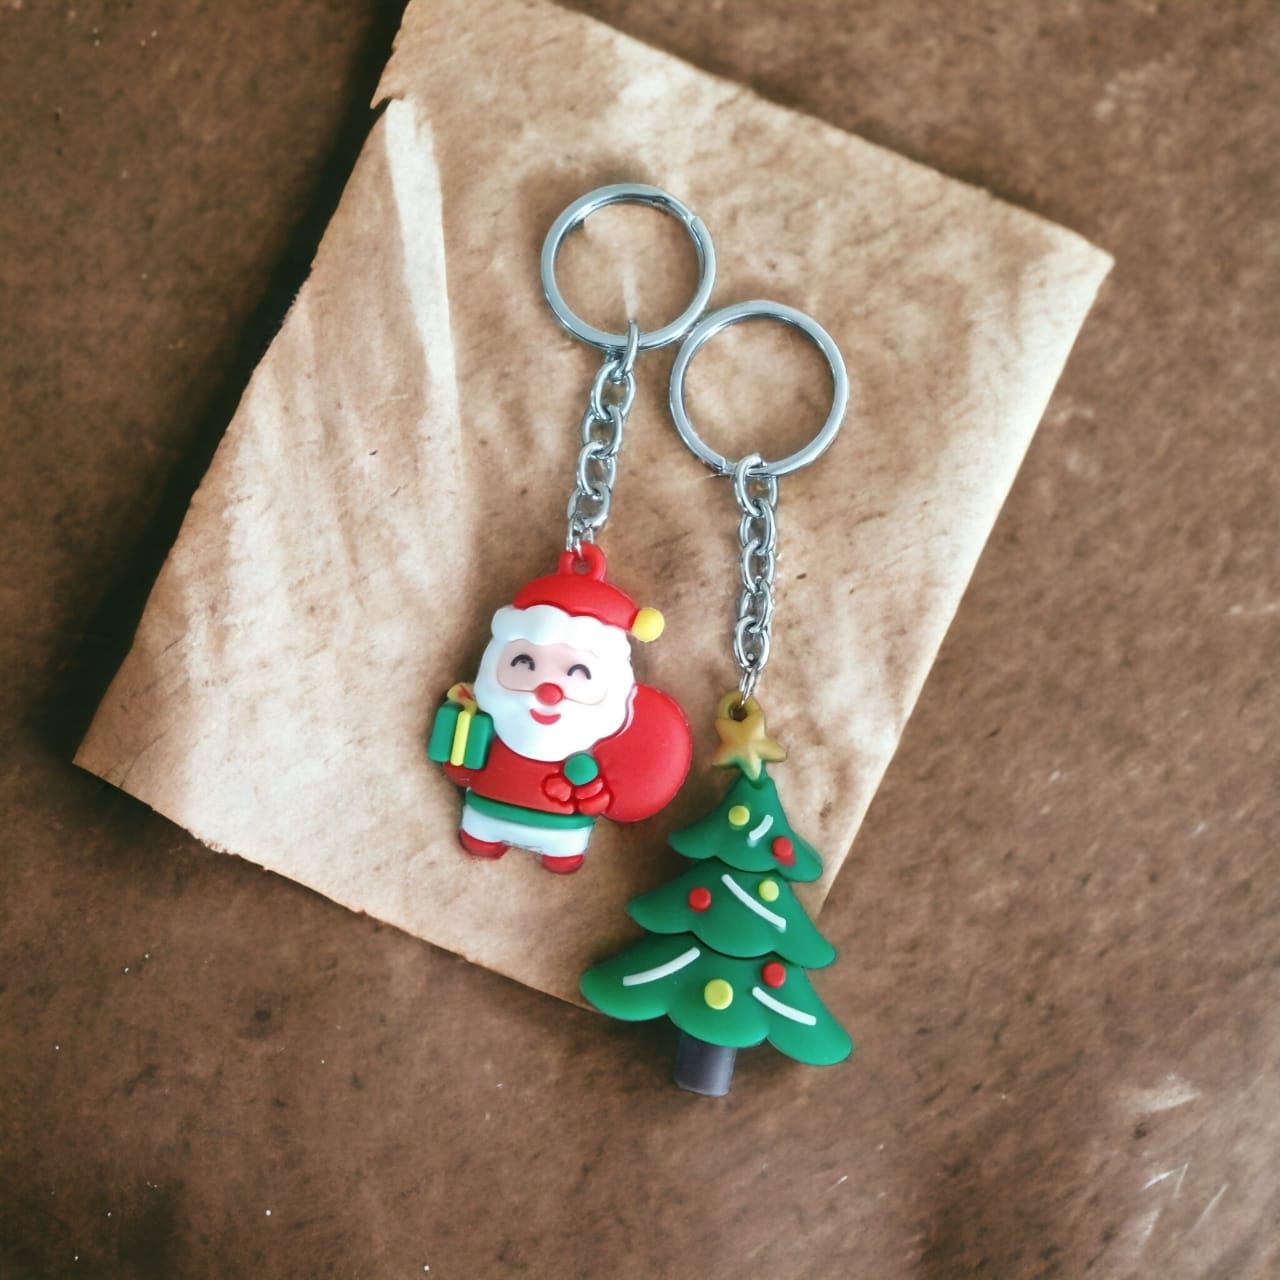 Shakti Keychain pouch set of 2 Christmas Xmas key ring chain - Santa keychain